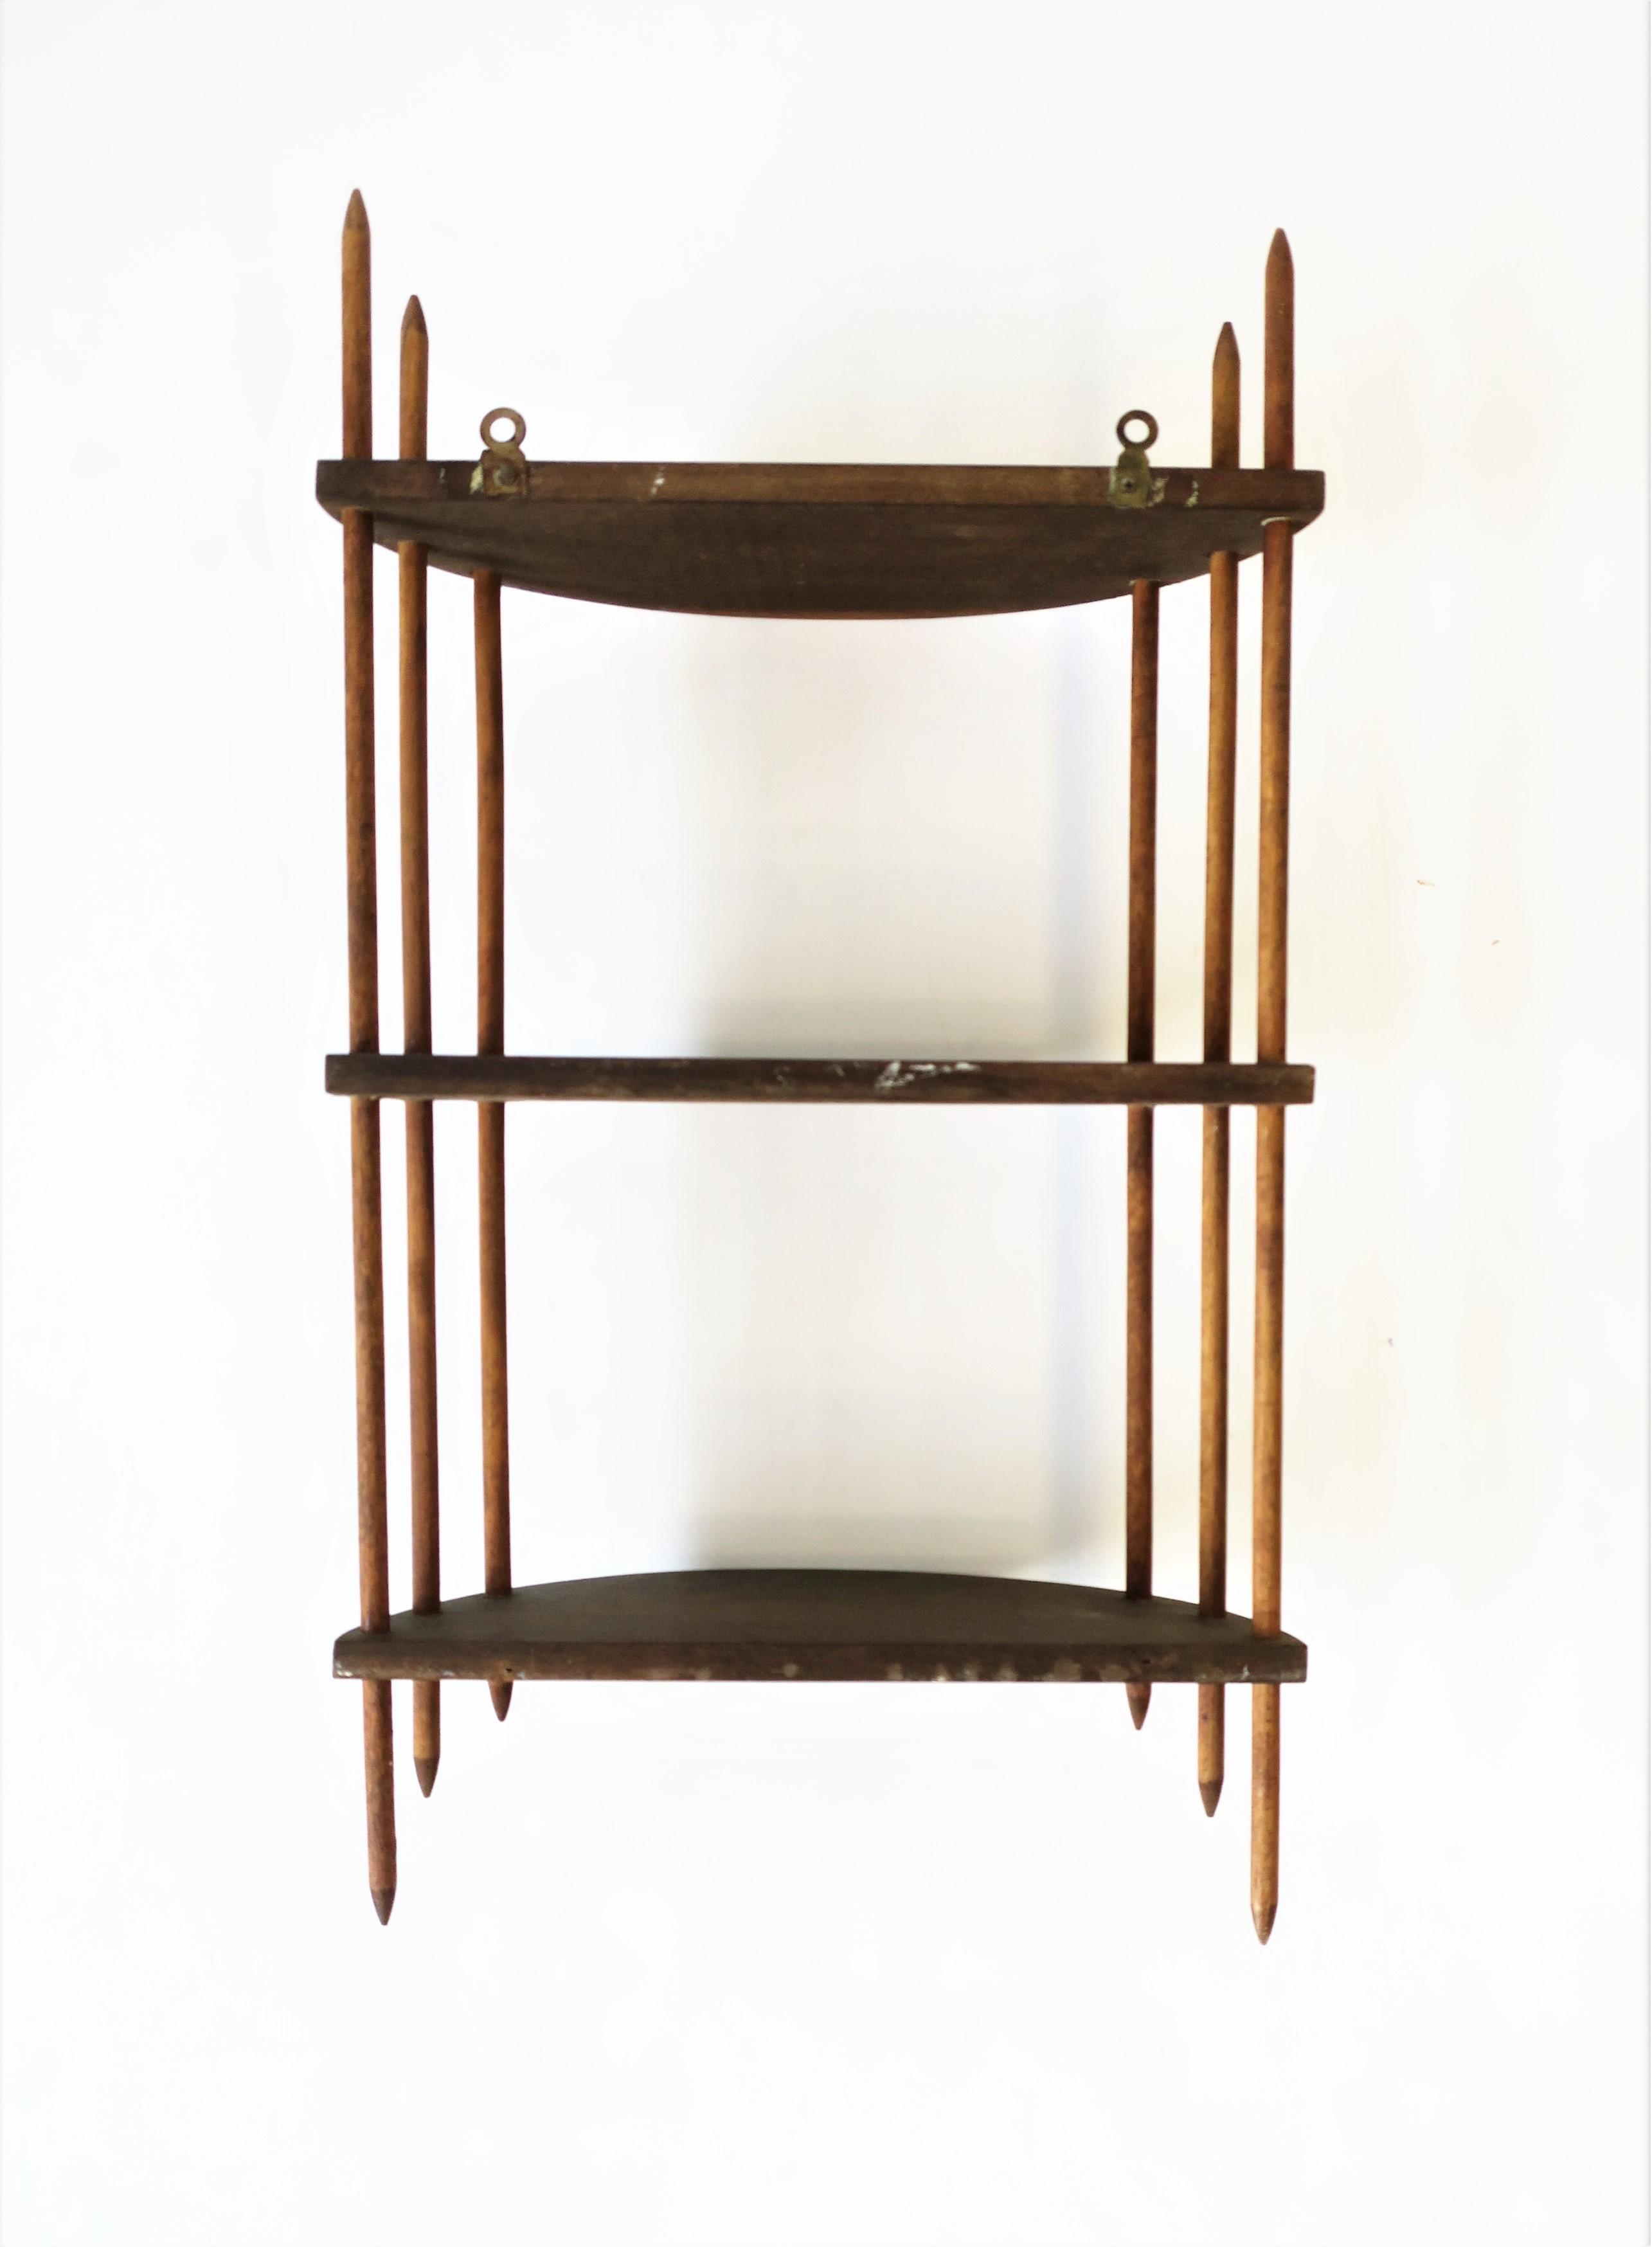 Art Deco Modern Period Natural Wood Wall Shelf with Shelves 8